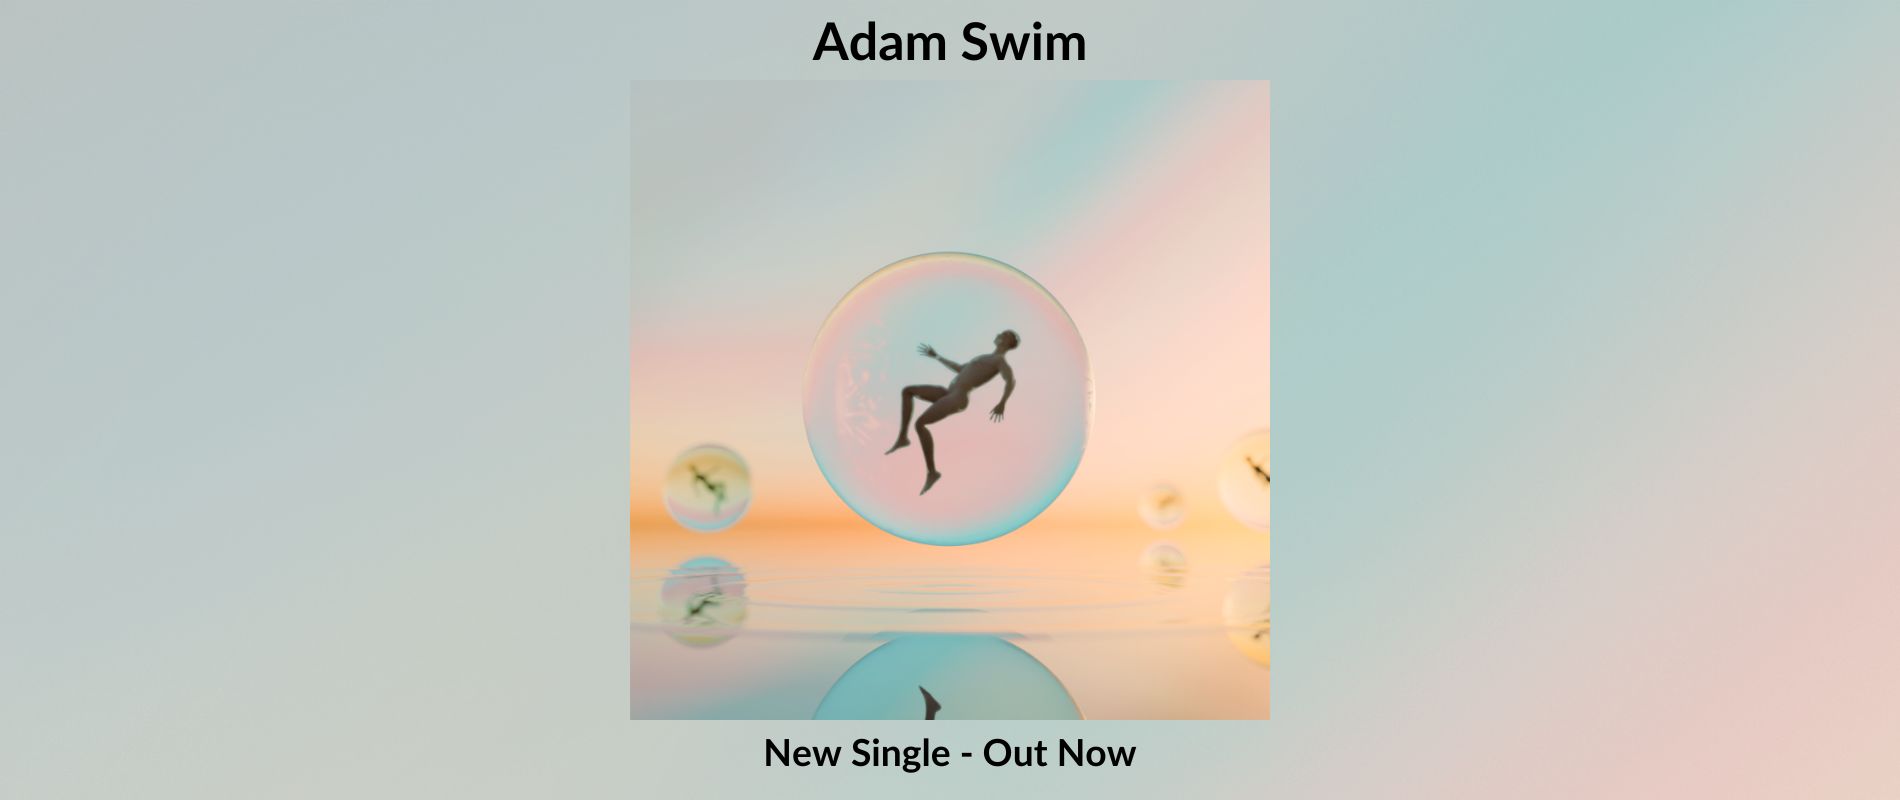 Adam Swim - Sweetness On Your Lips cover deep house music